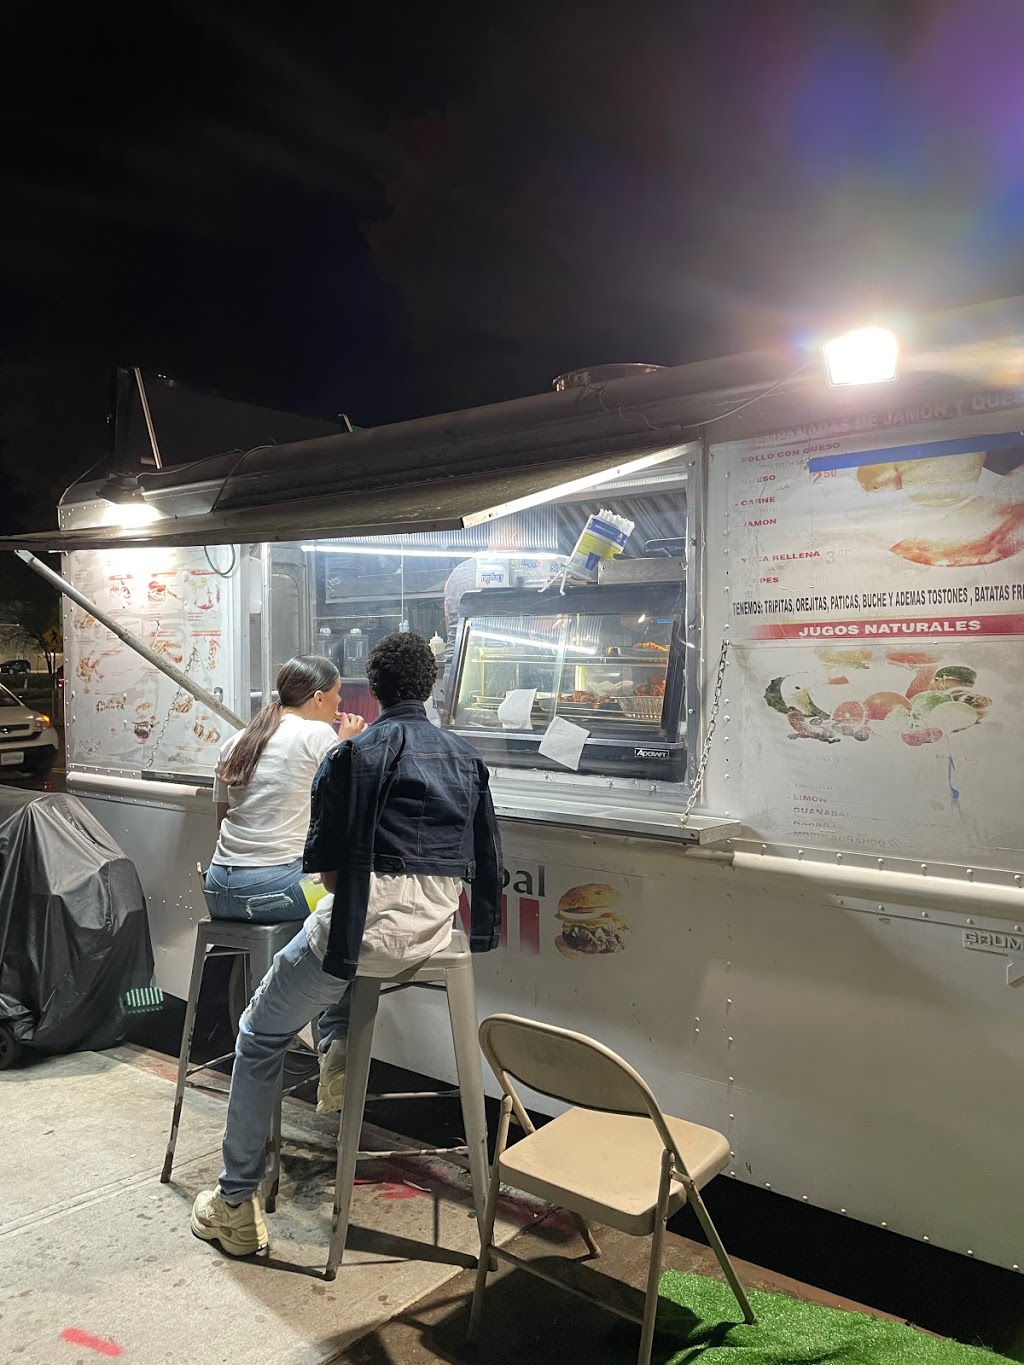 Chimi San Cristobal Dominican Food Truck | restaurant | 100 Jamaica Ave, Brooklyn, NY 11207, USA | 9294789225 OR +1 929-478-9225